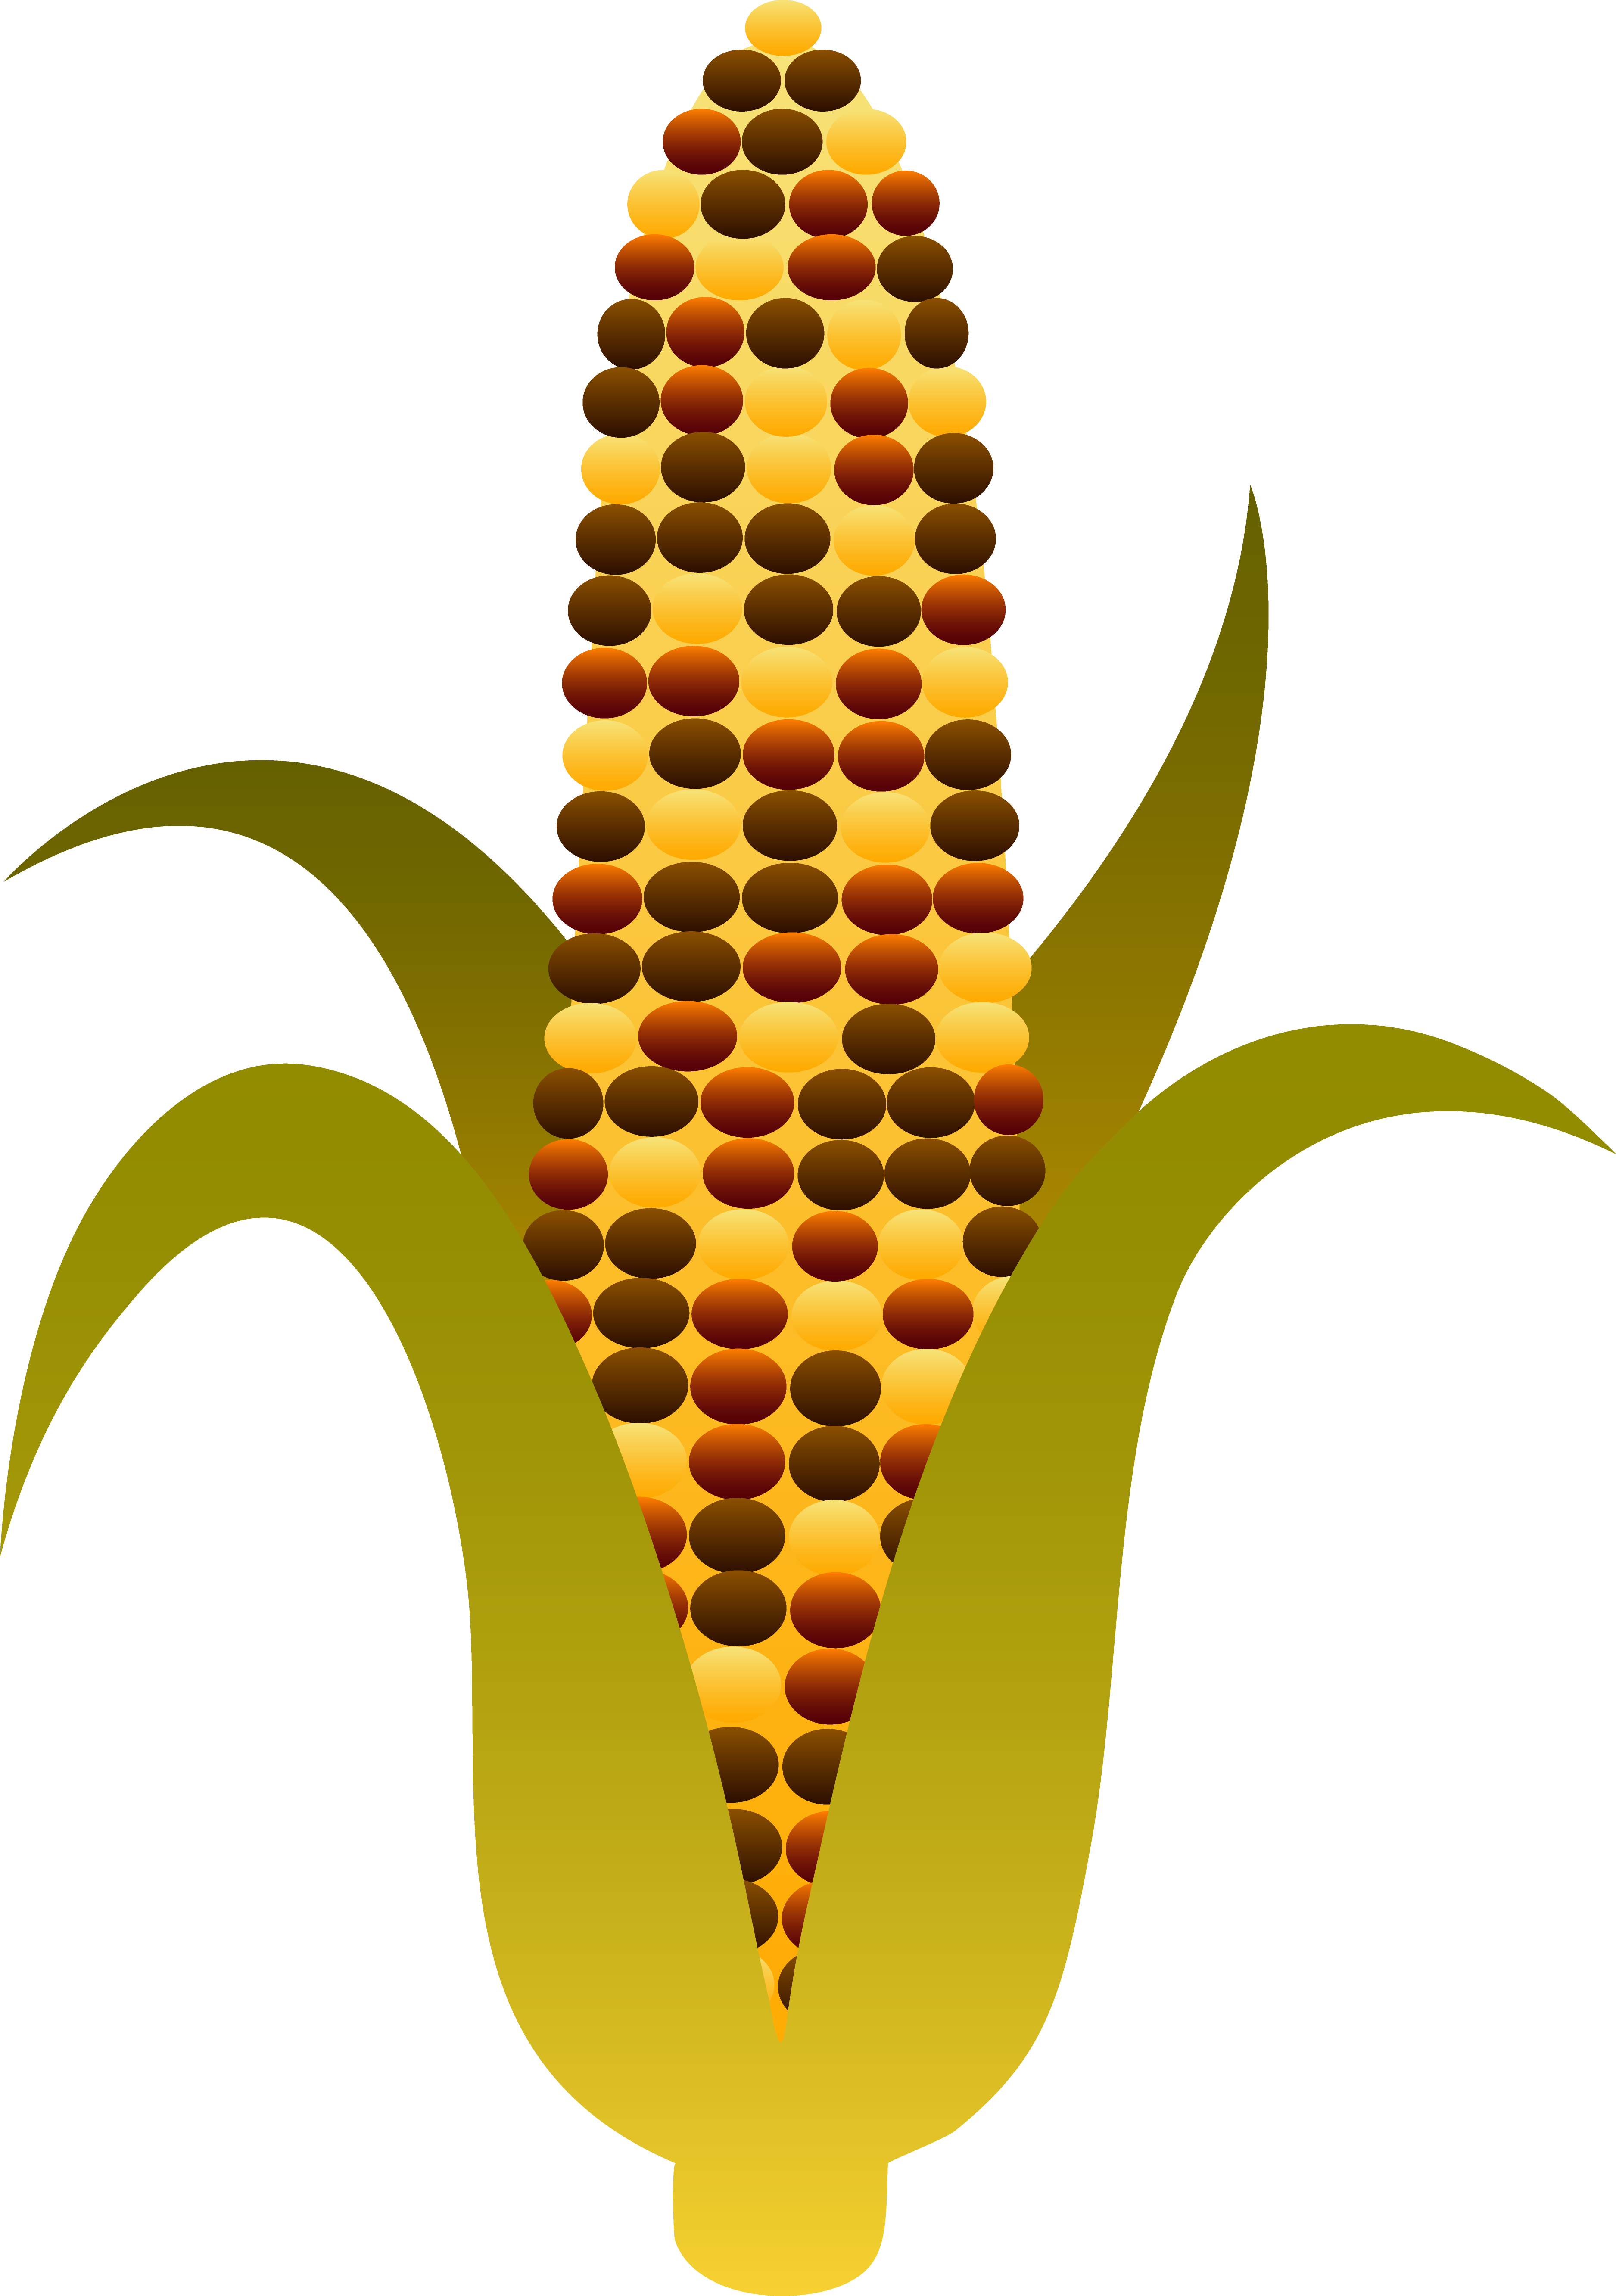 Vegetables clipart harvest festival. Indian corn maize free